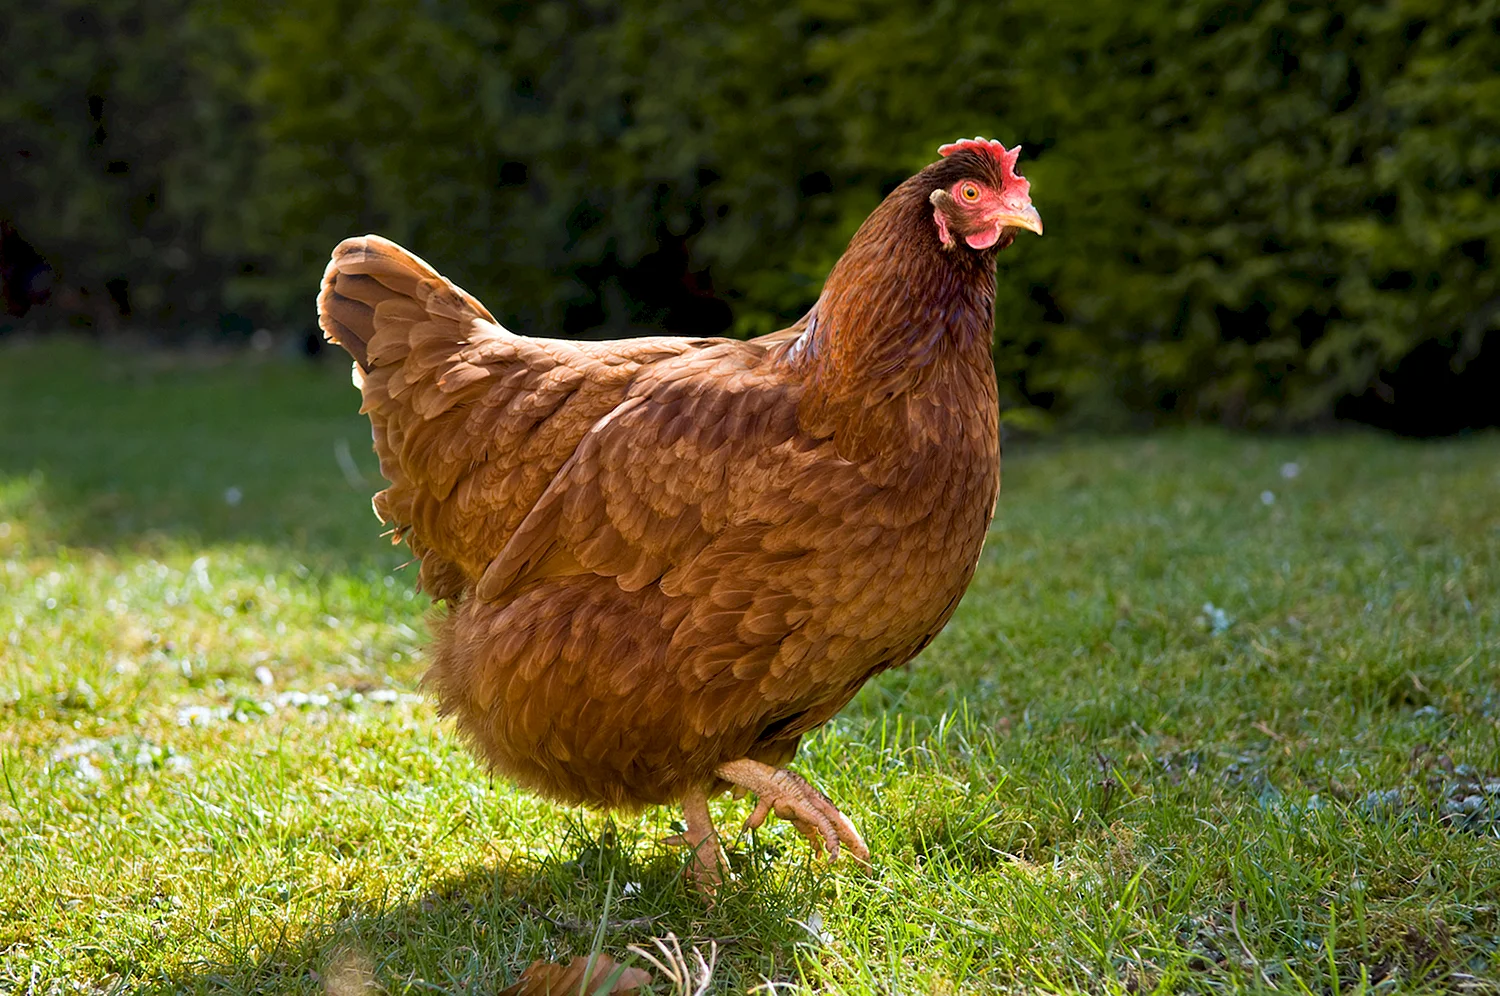 Род-Айленд порода кур